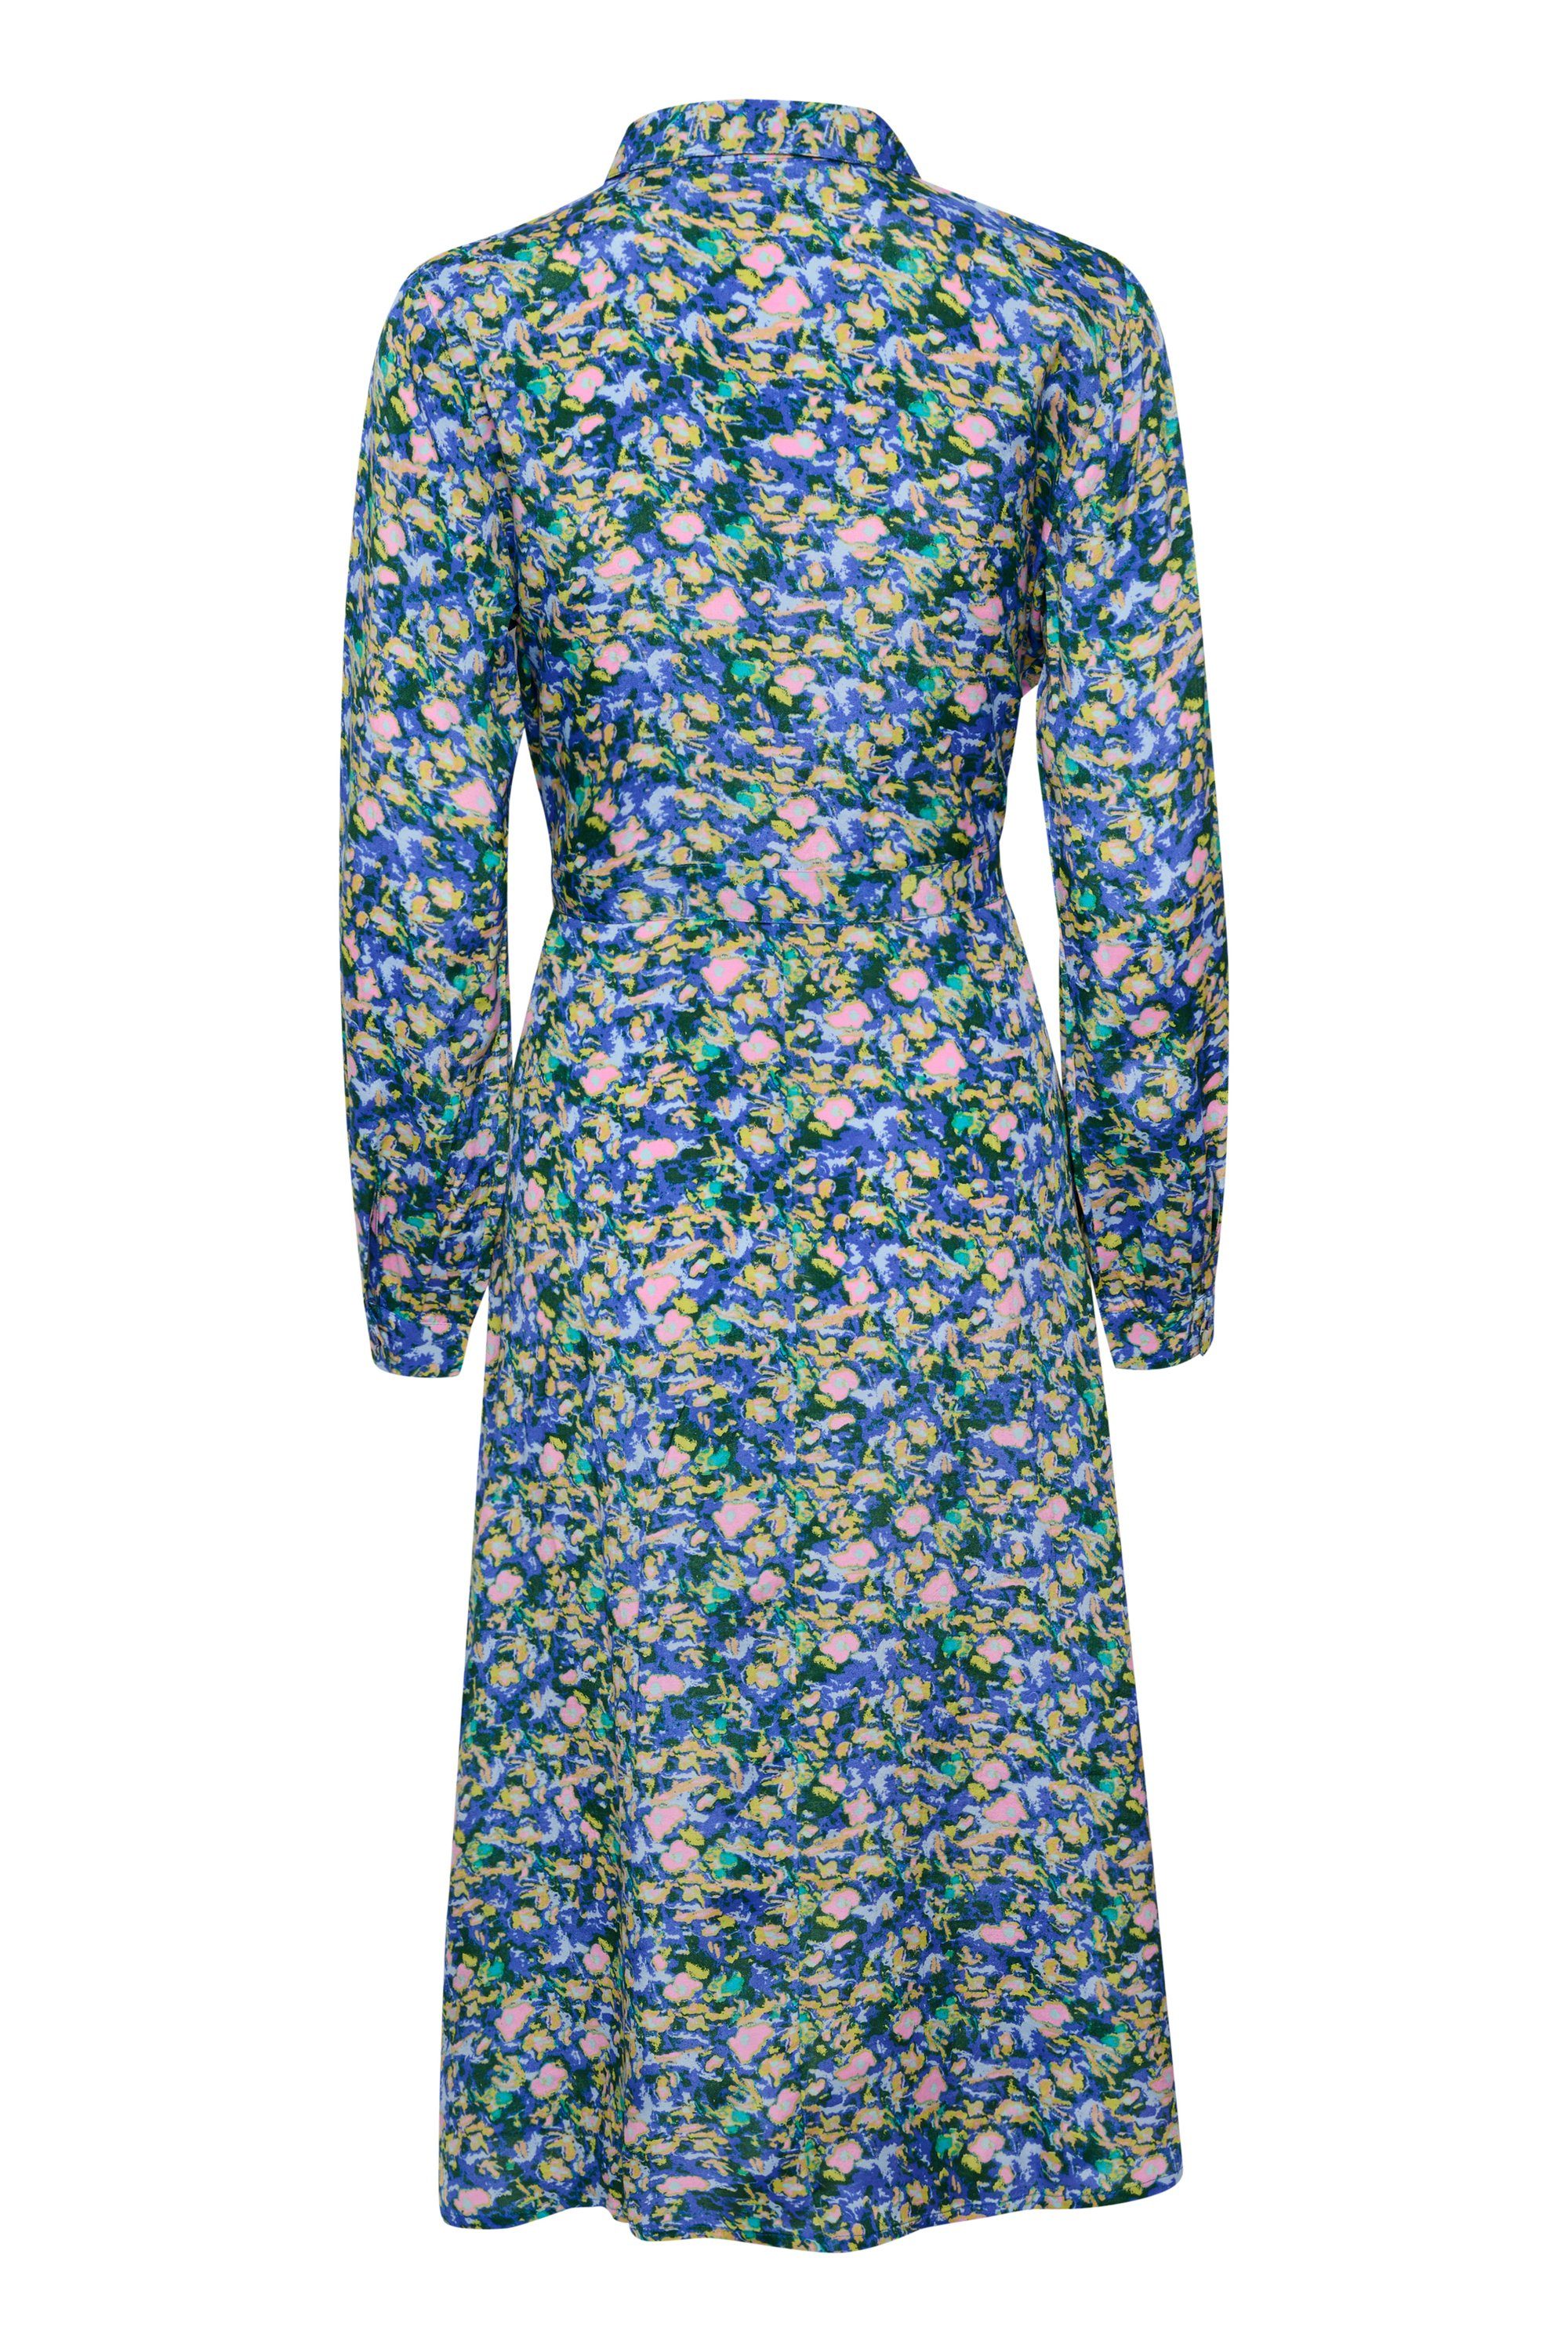 KAFFE Jerseykleid Kleid Print KAmaria Blurry Flower Blue